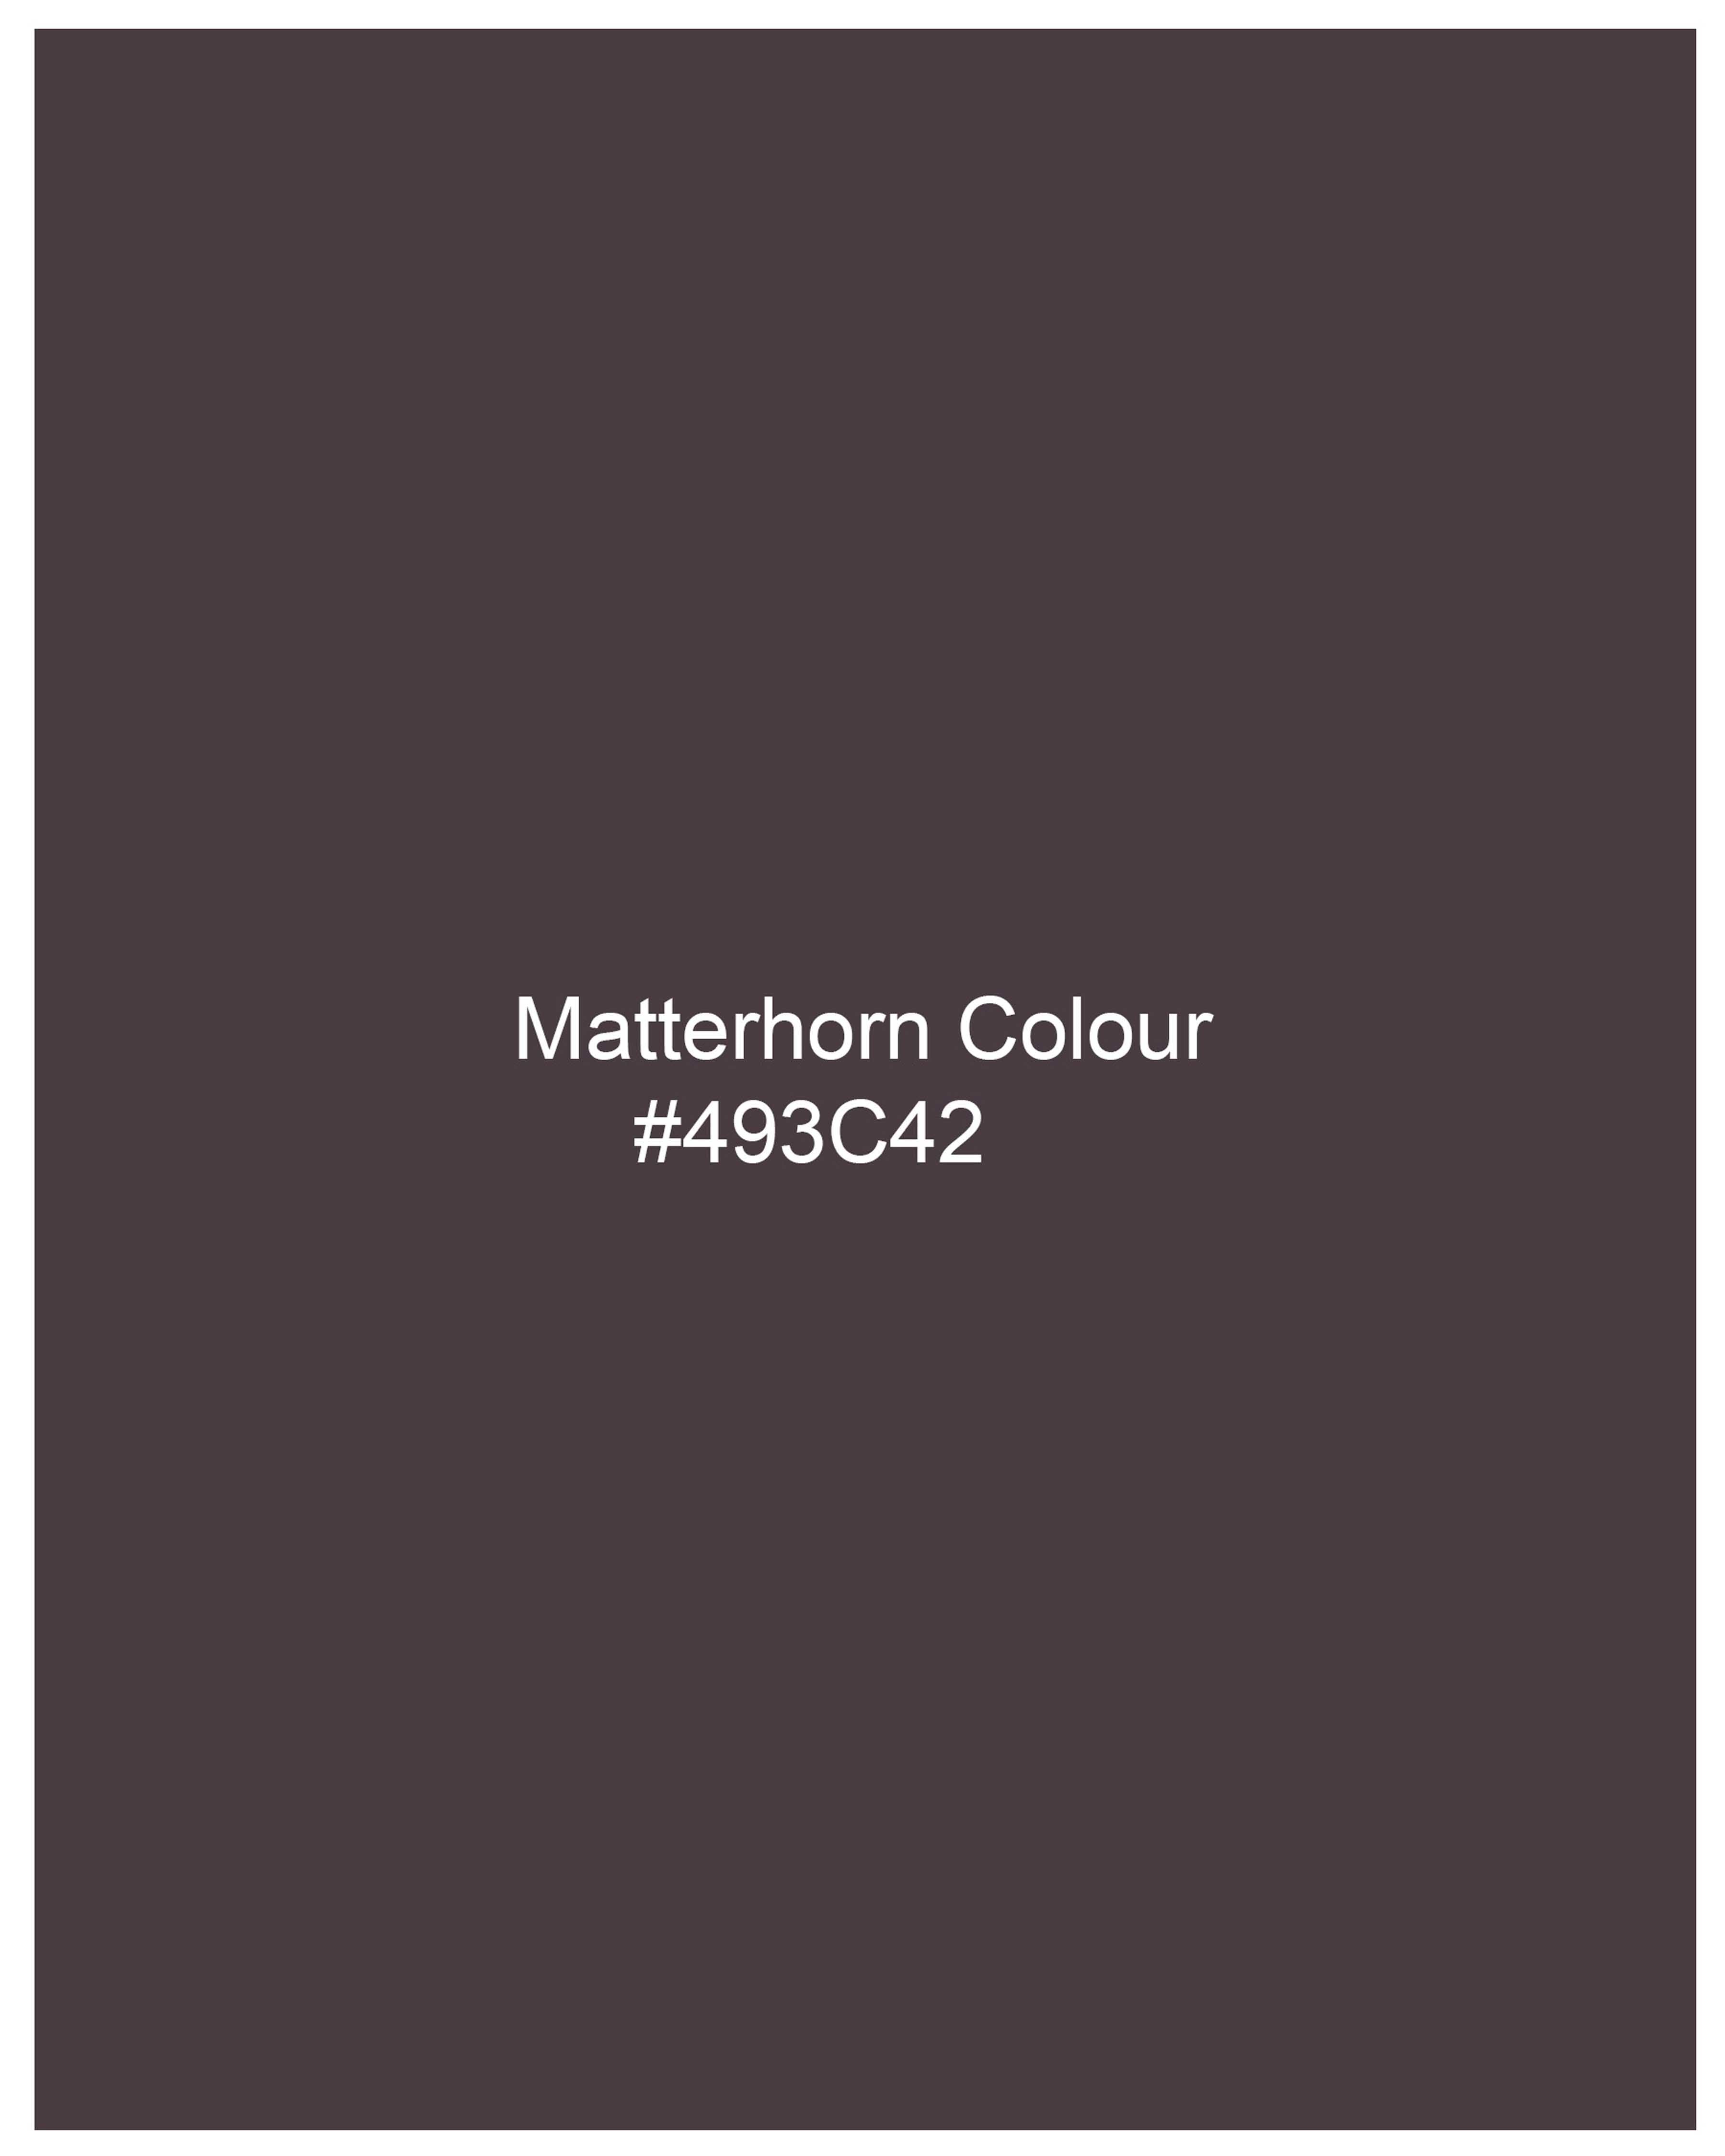 Matterhorn Brown with Maroon Subtle Plaid Double Breasted Blazer BL2054-DB-36, BL2054-DB-38, BL2054-DB-40, BL2054-DB-42, BL2054-DB-44, BL2054-DB-46, BL2054-DB-48, BL2054-DB-50, BL2054-DB-52, BL2054-DB-54, BL2054-DB-56, BL2054-DB-58, BL2054-DB-60